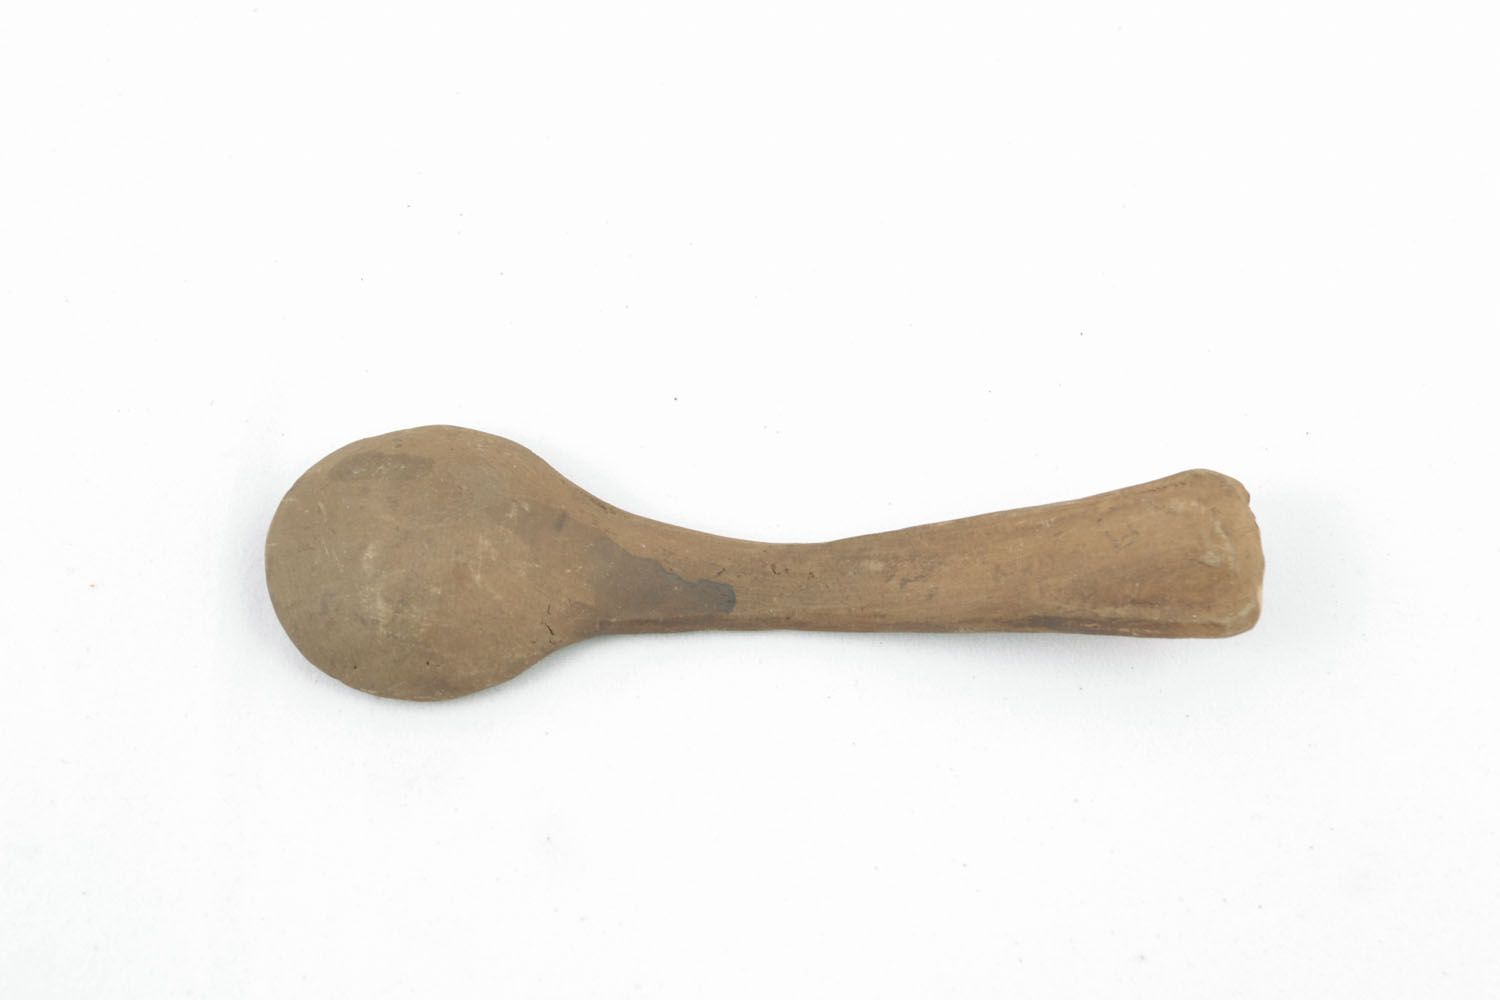 Homemade clay spoon photo 1